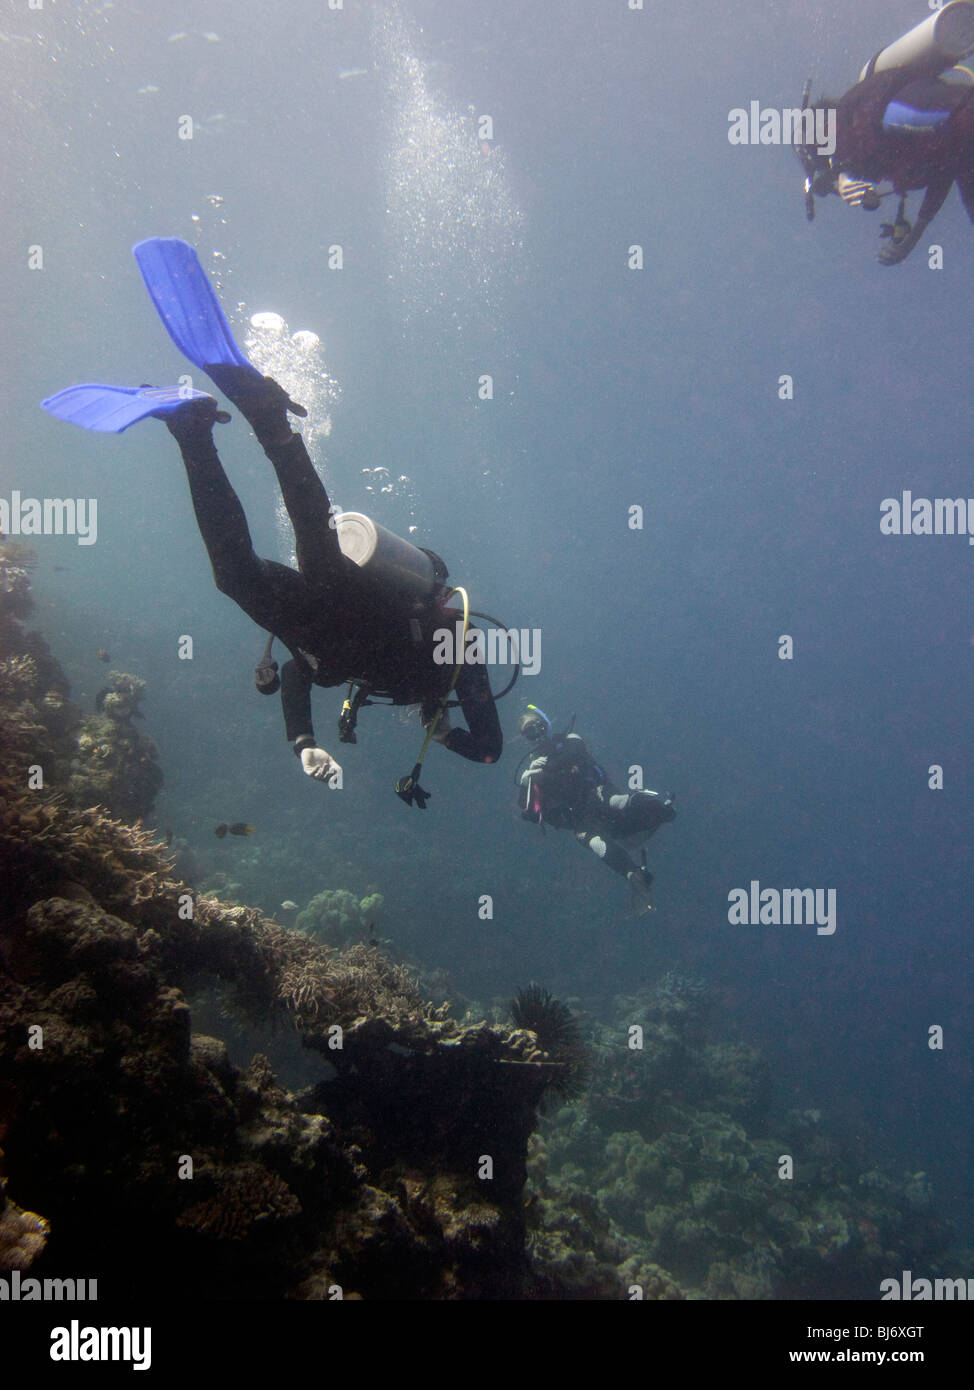 Indonesia, Sulawesi, Wakatobi National Park, underwater, scuba diver swimming above coral reef Stock Photo